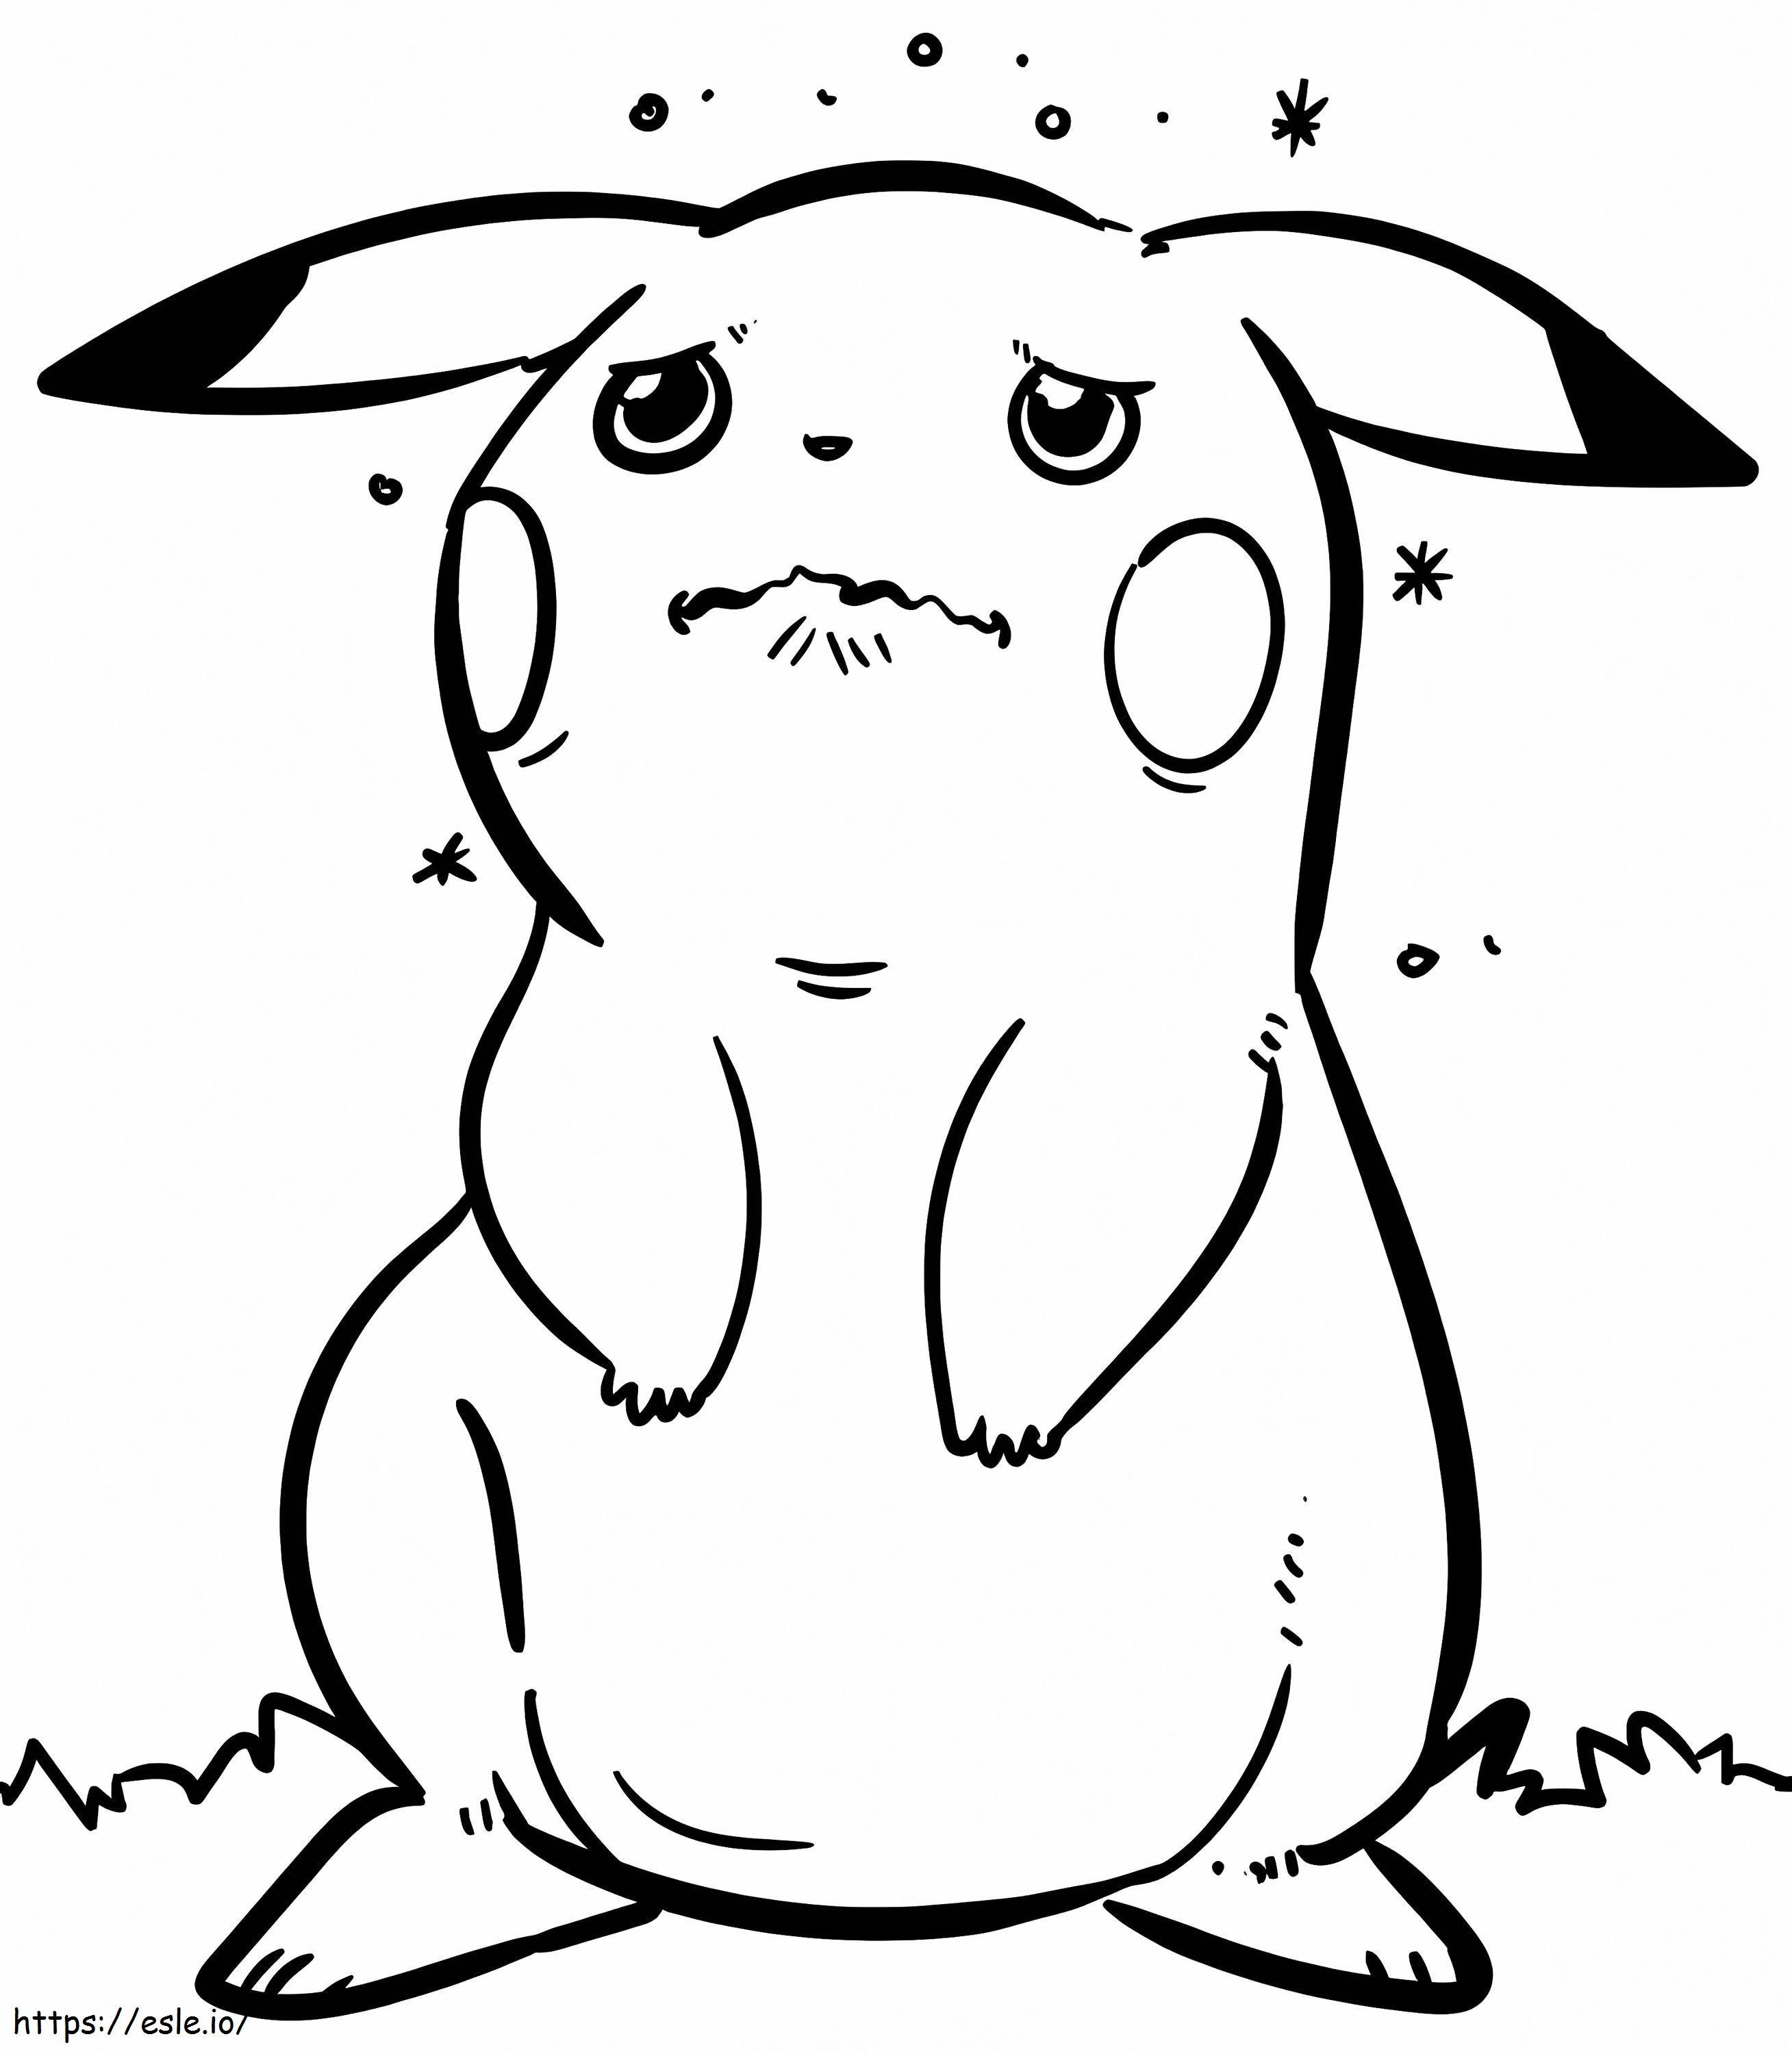 Pikachu triste para colorear